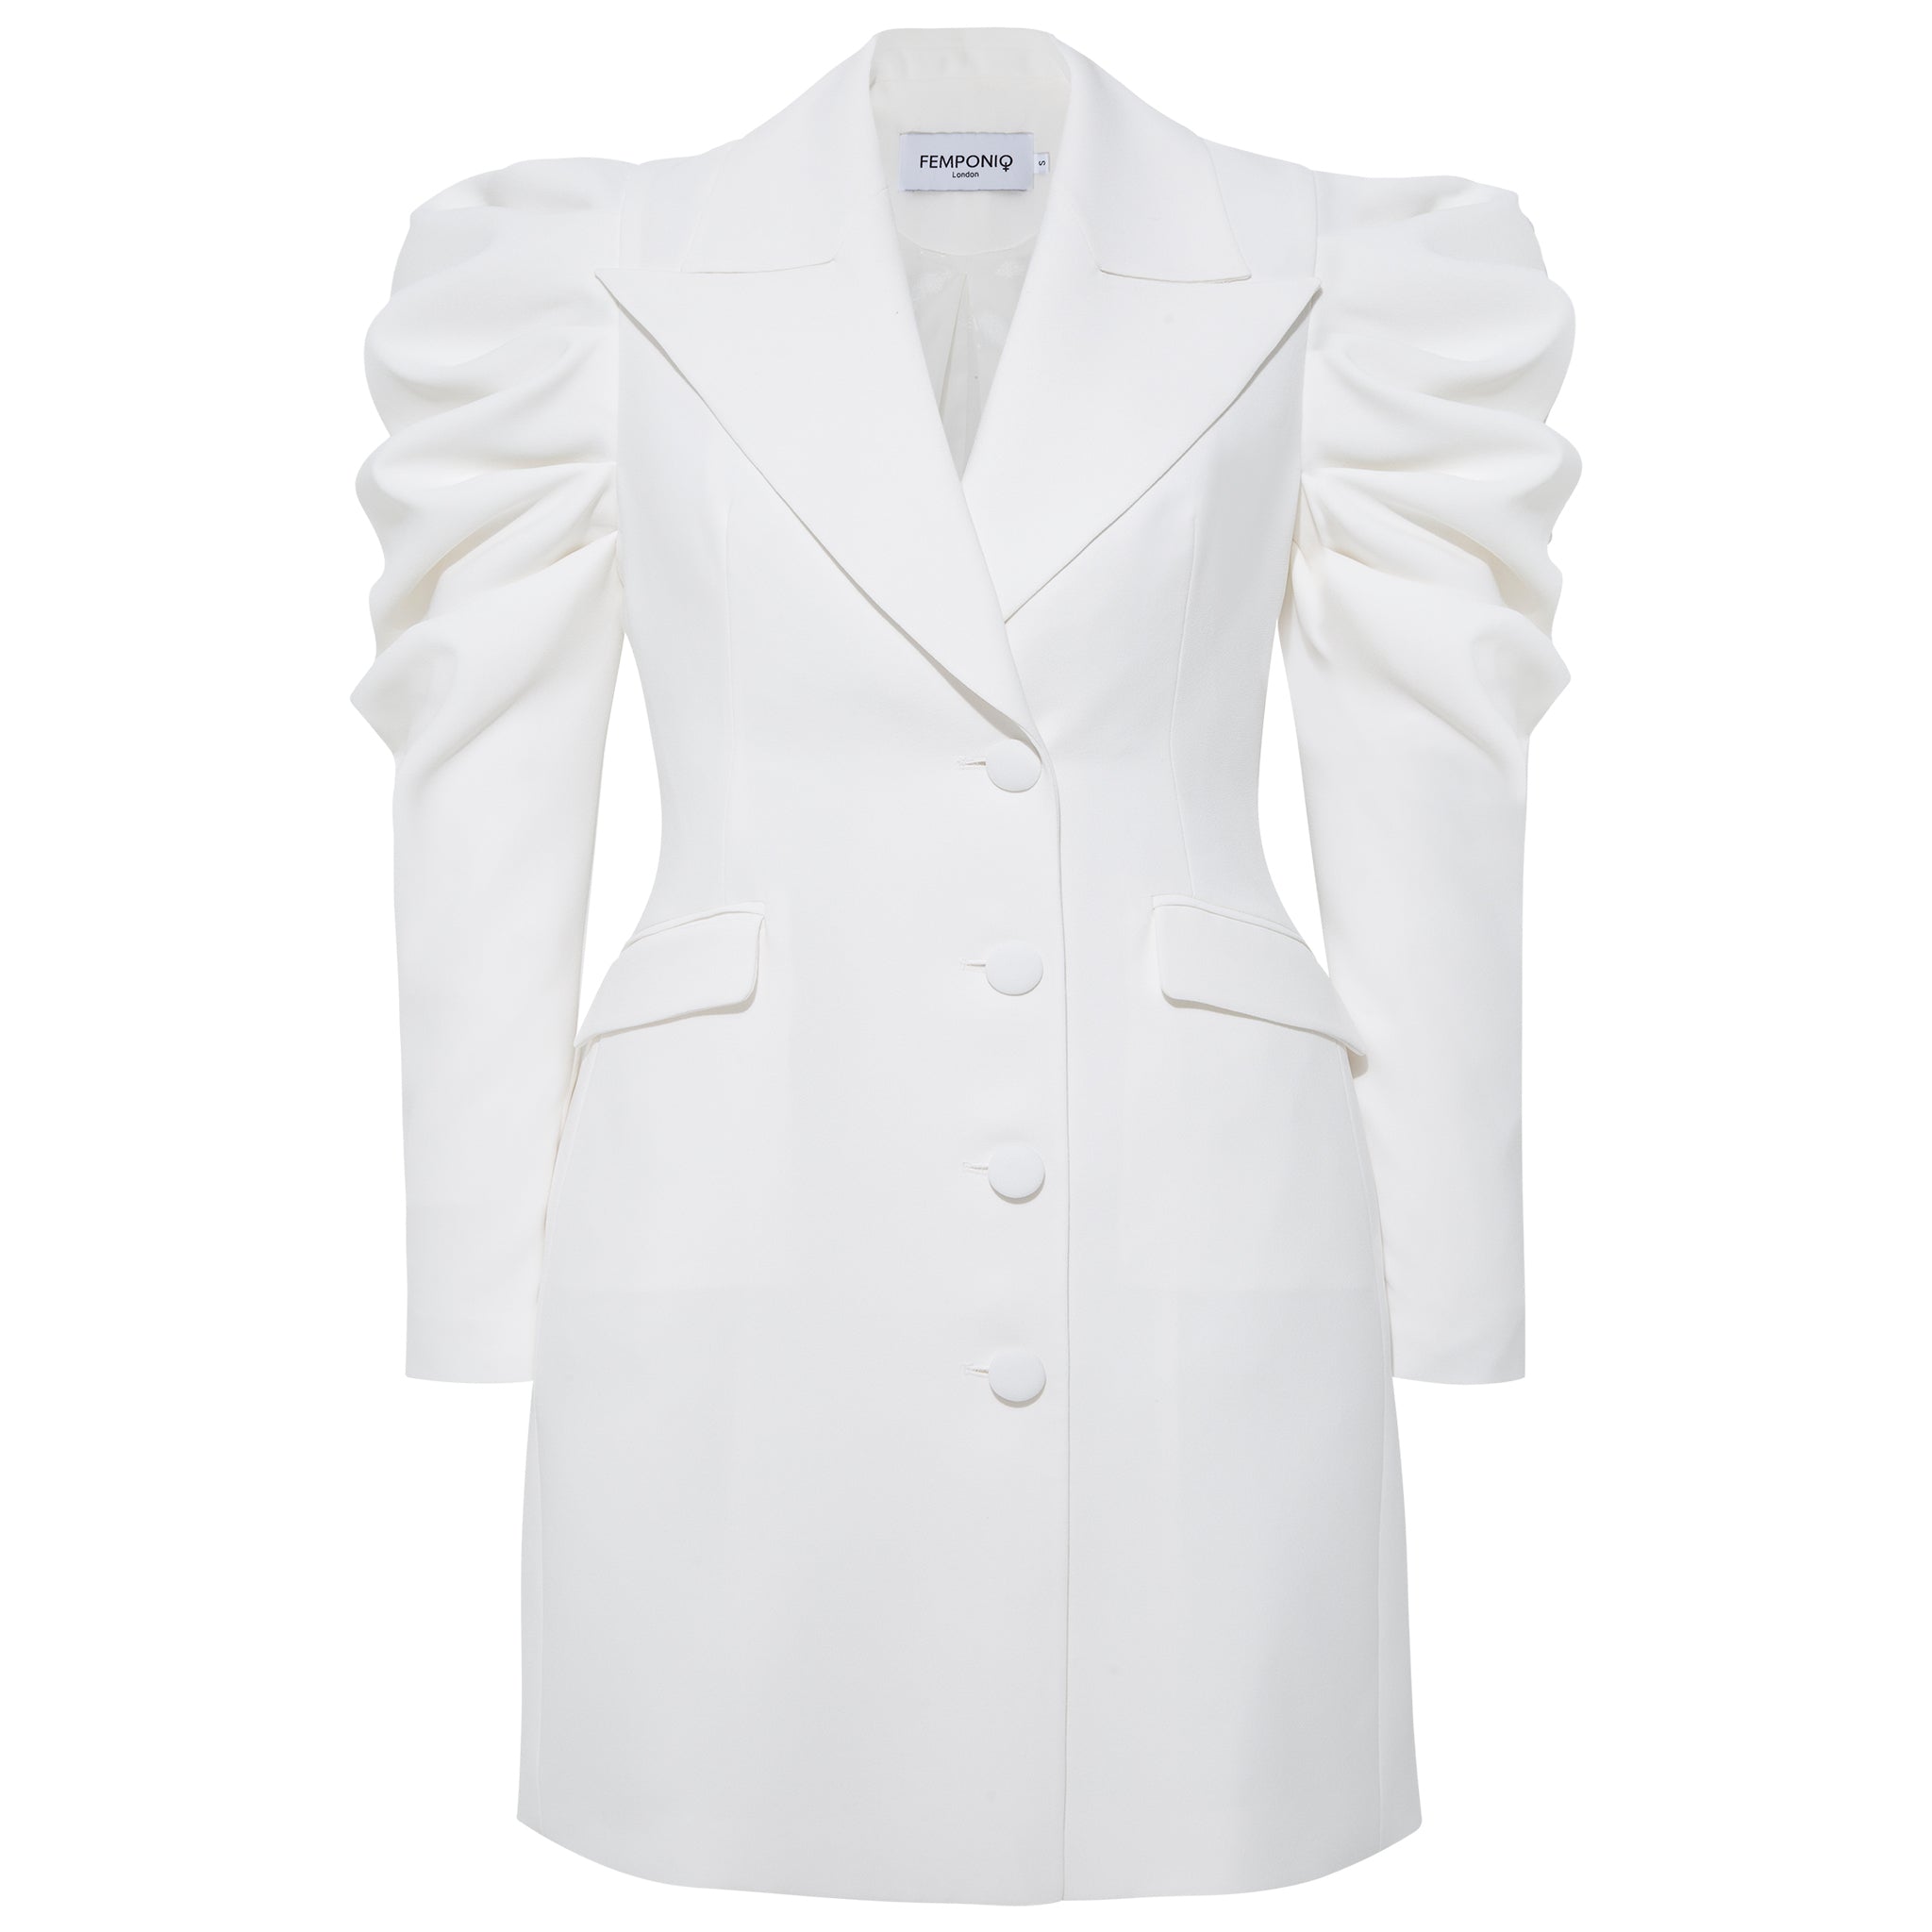 Women’s Draped Sleeved Tailored Blazer Dress - White Medium Femponiq